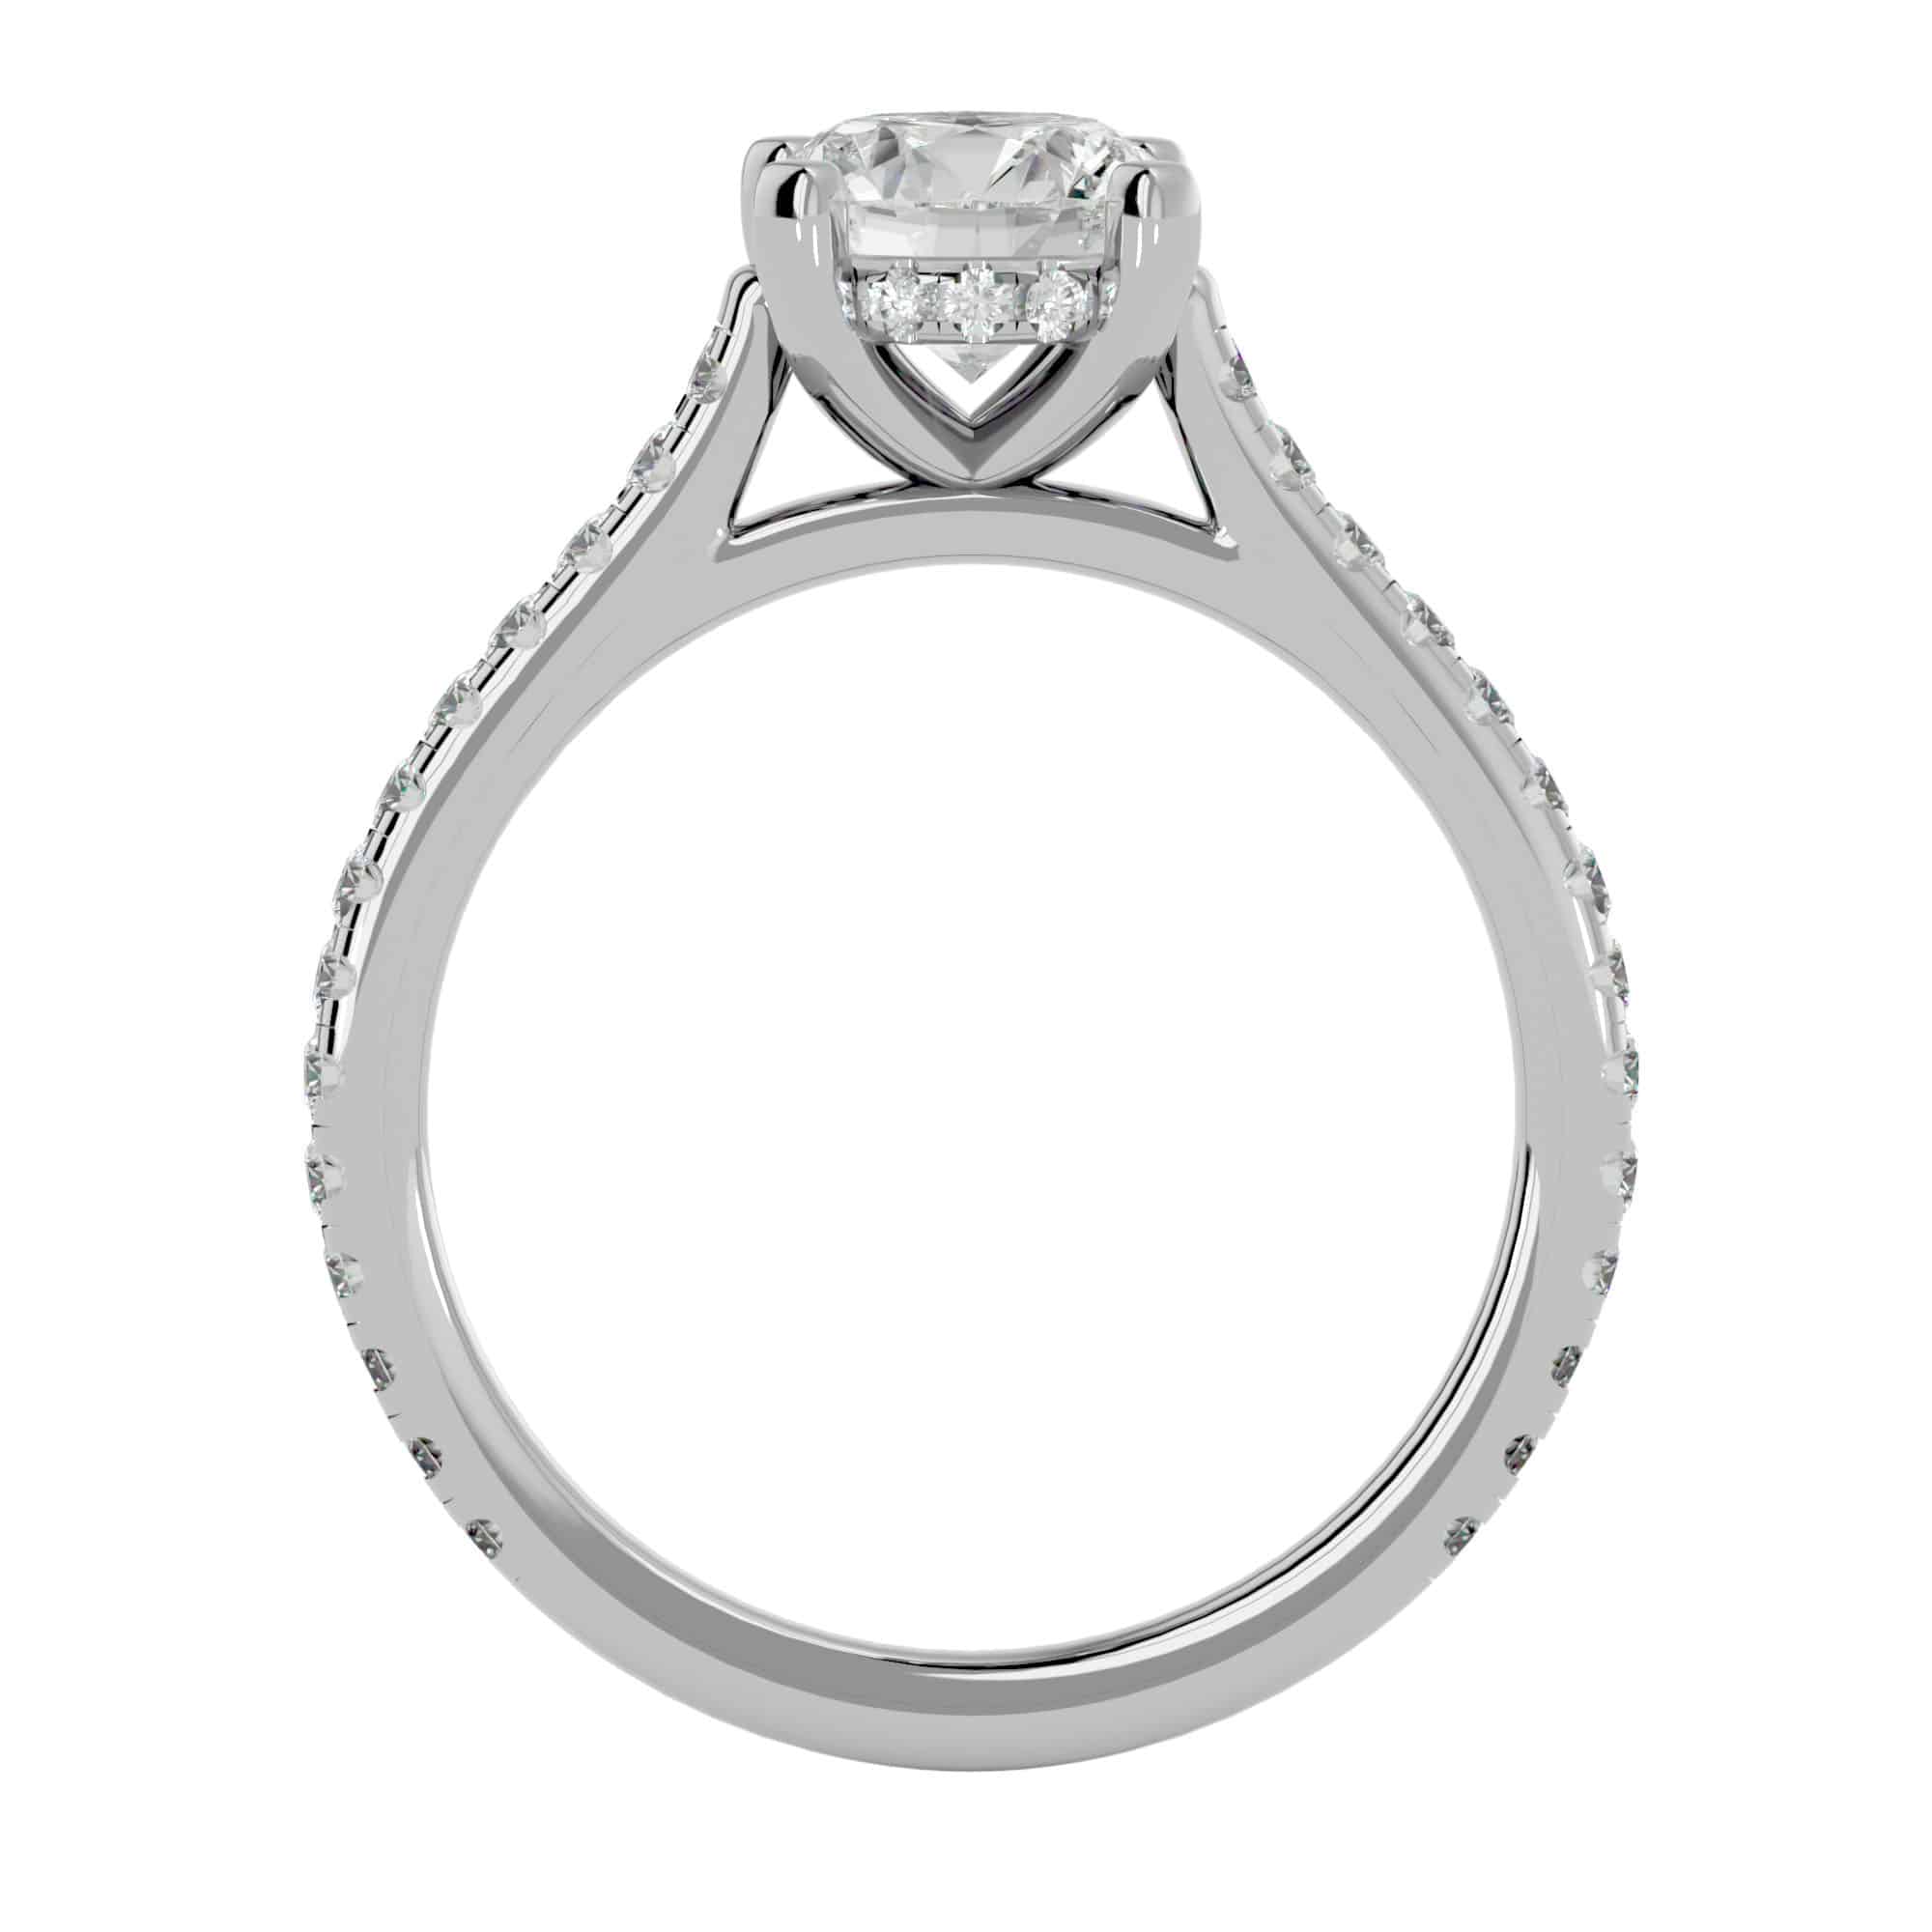 Hidden Halo Engagement Ring - 1.11carat E colour VS1 Clarity